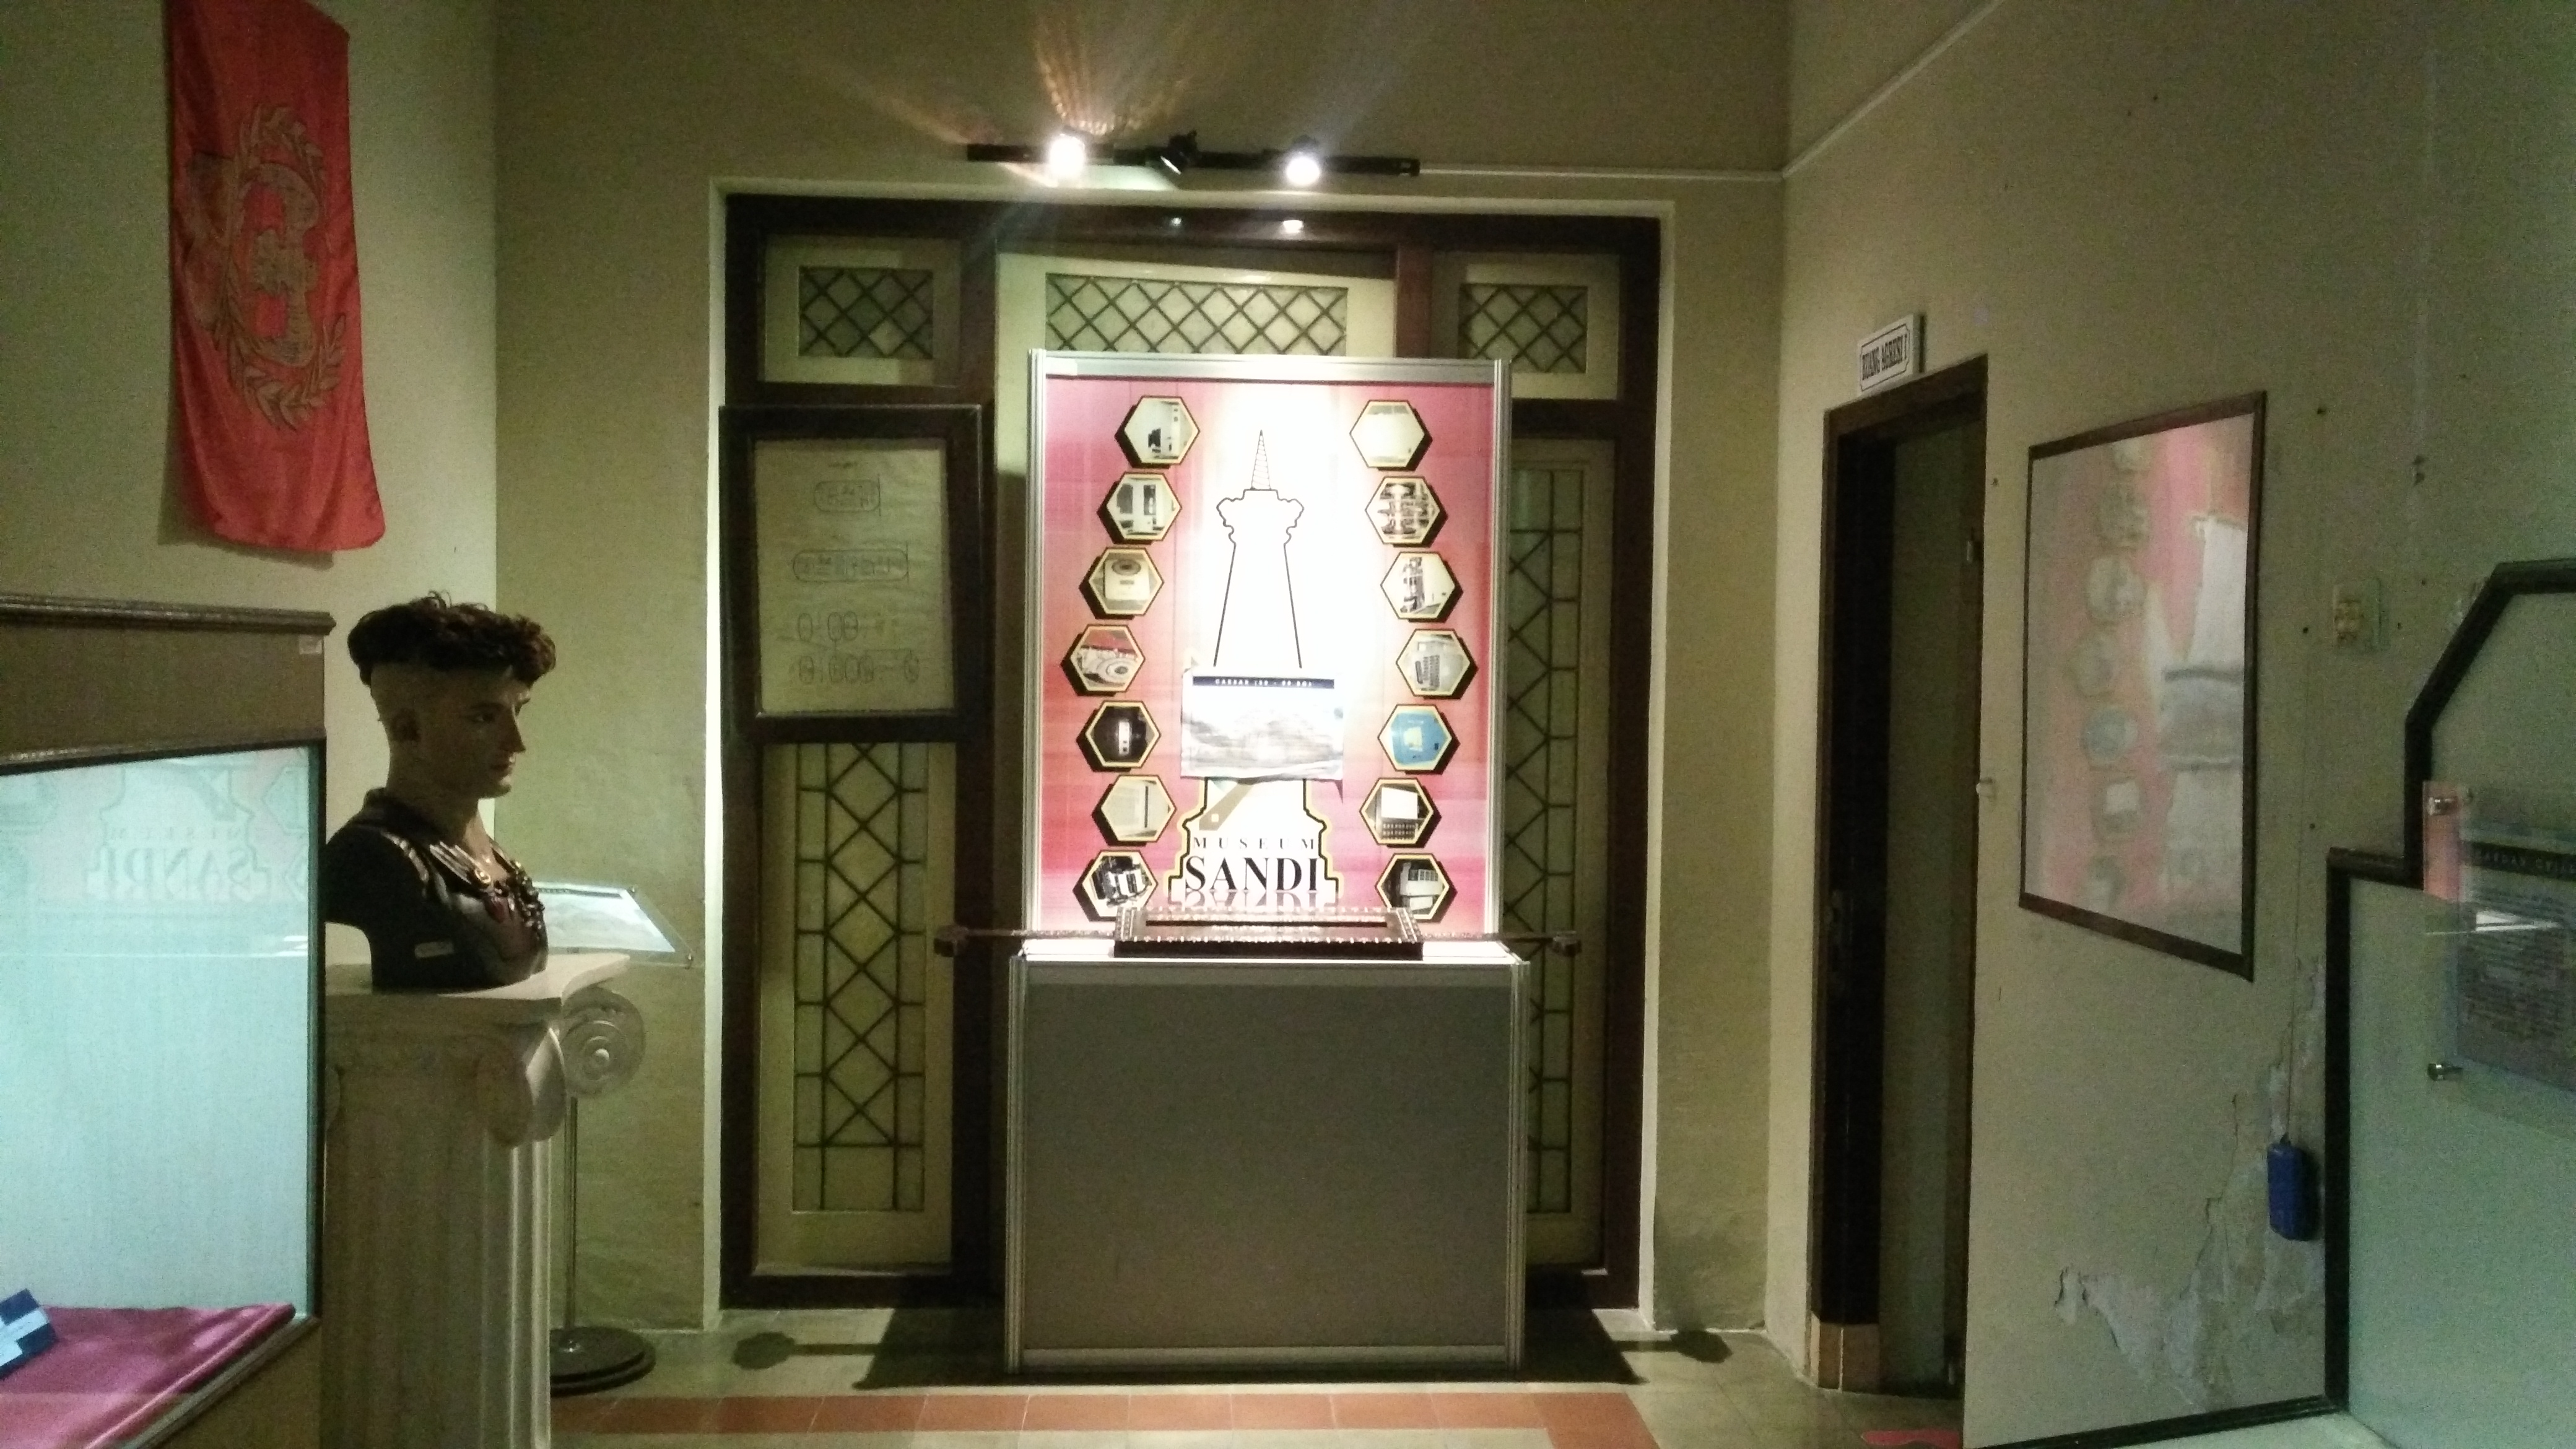 Koleksi di Museum Sandi Yogyakarta (c) MS FItriansyah/Travelingyuk